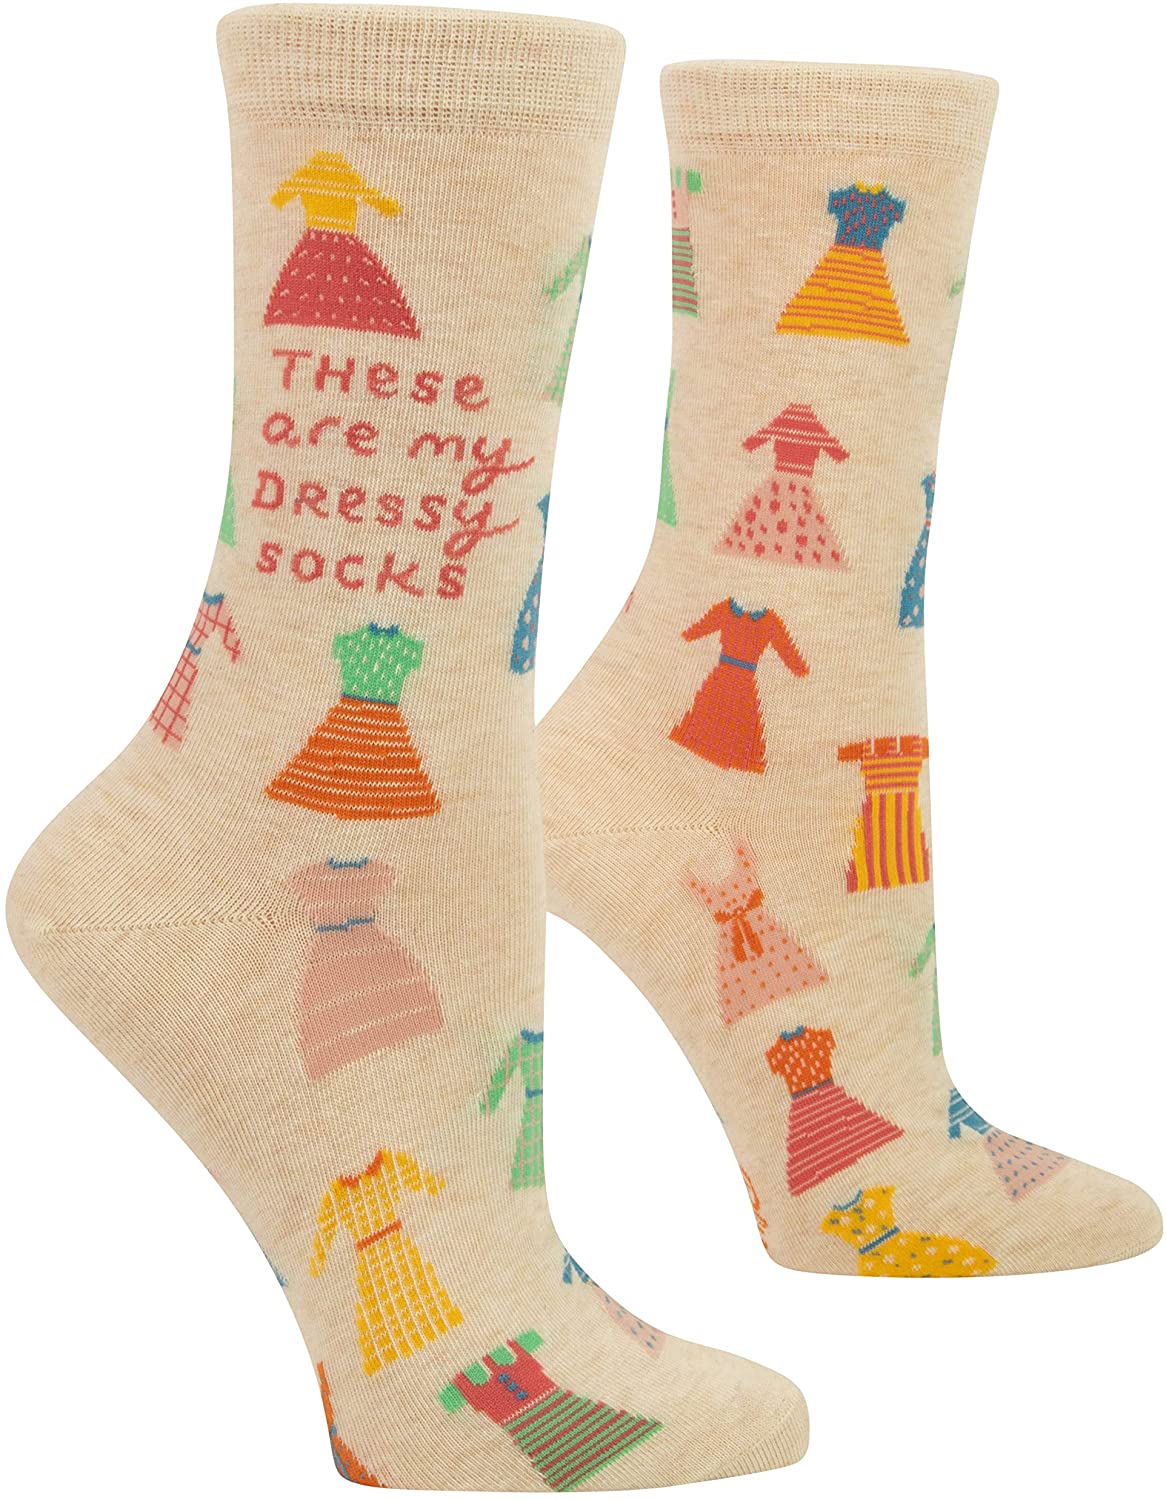 Socken Damen: These are my dressy socks